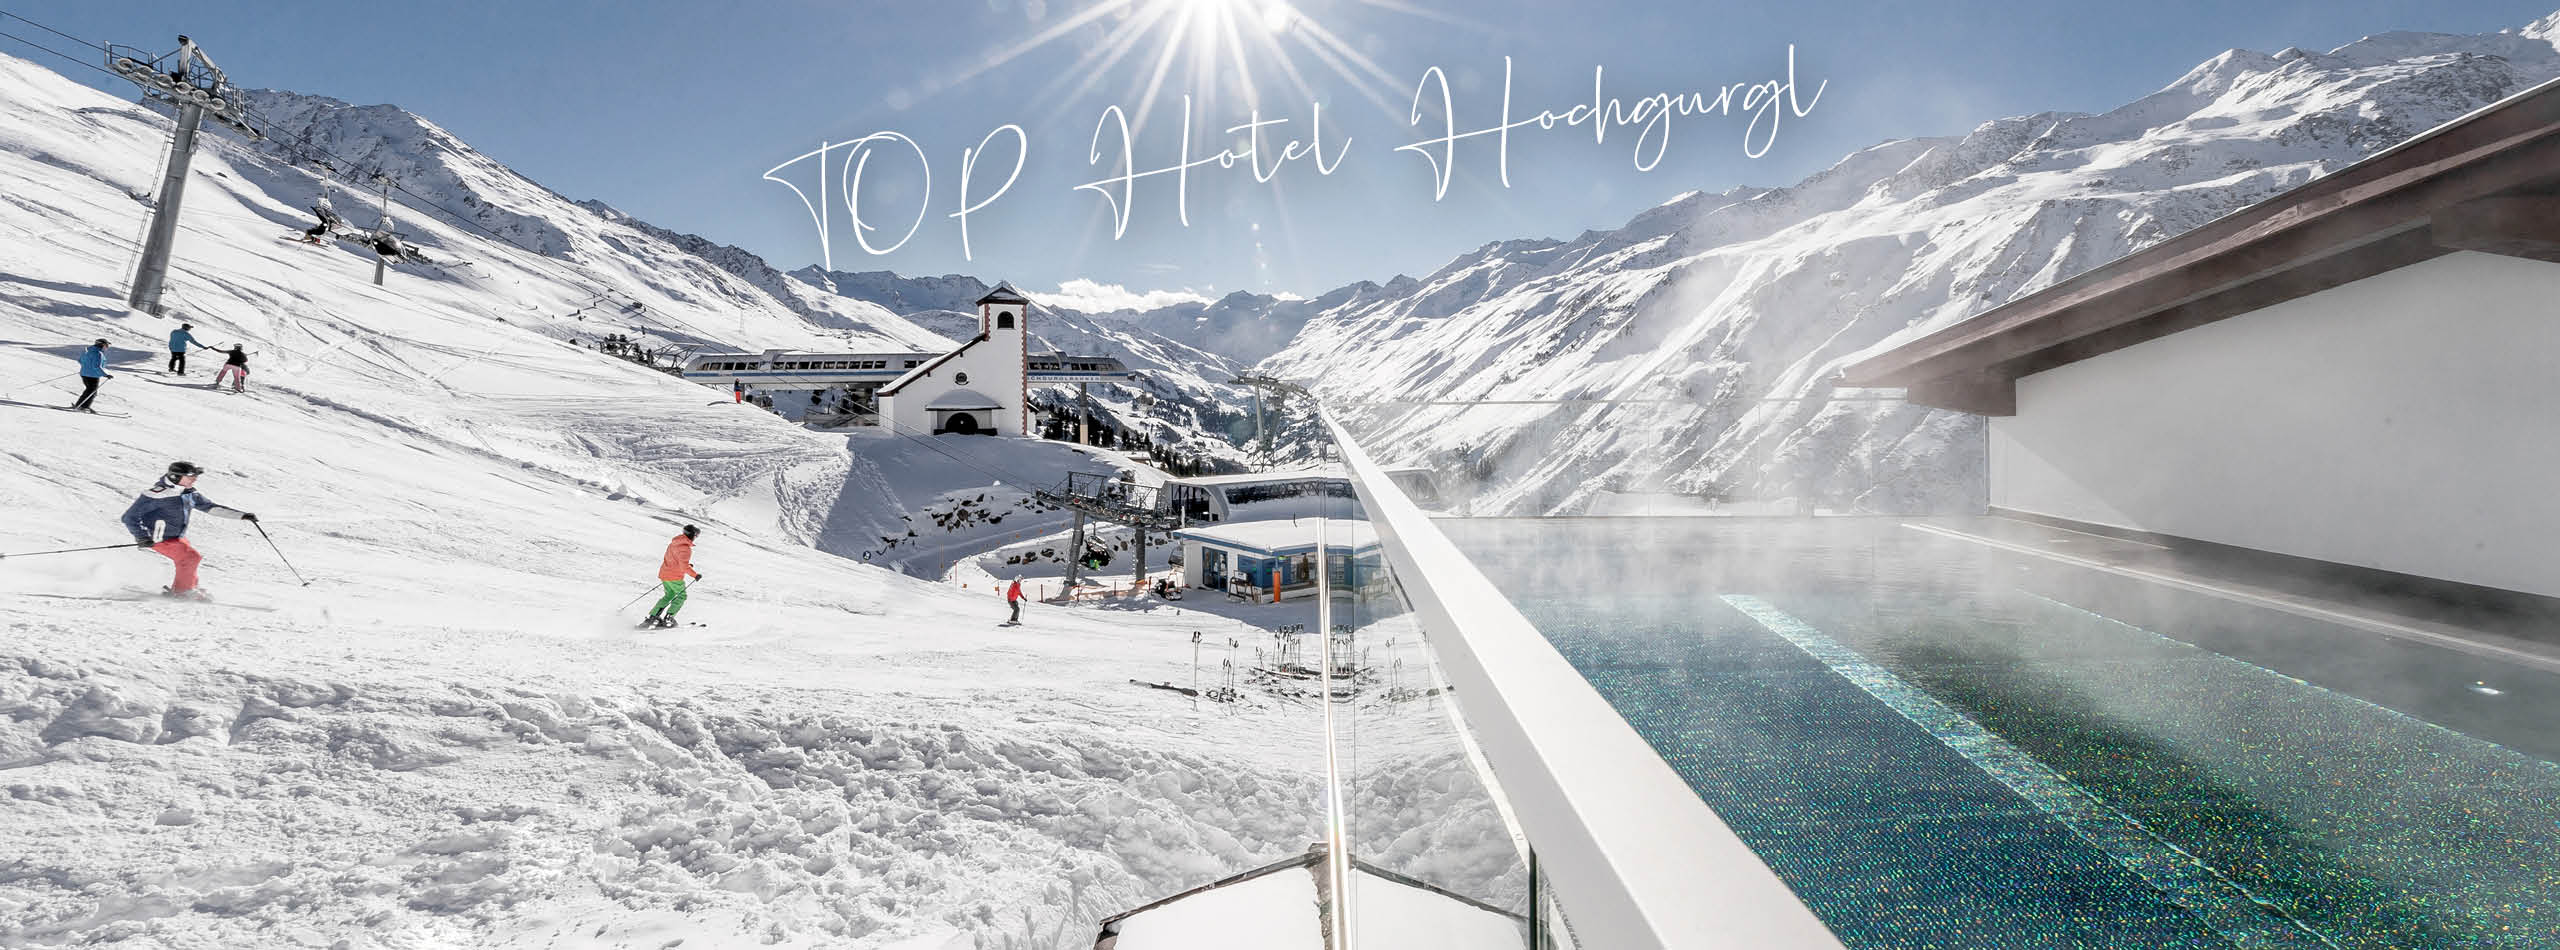 Relais Chateaux 5 star superior TOP Hotel Hochgurgl Tyrol Austria